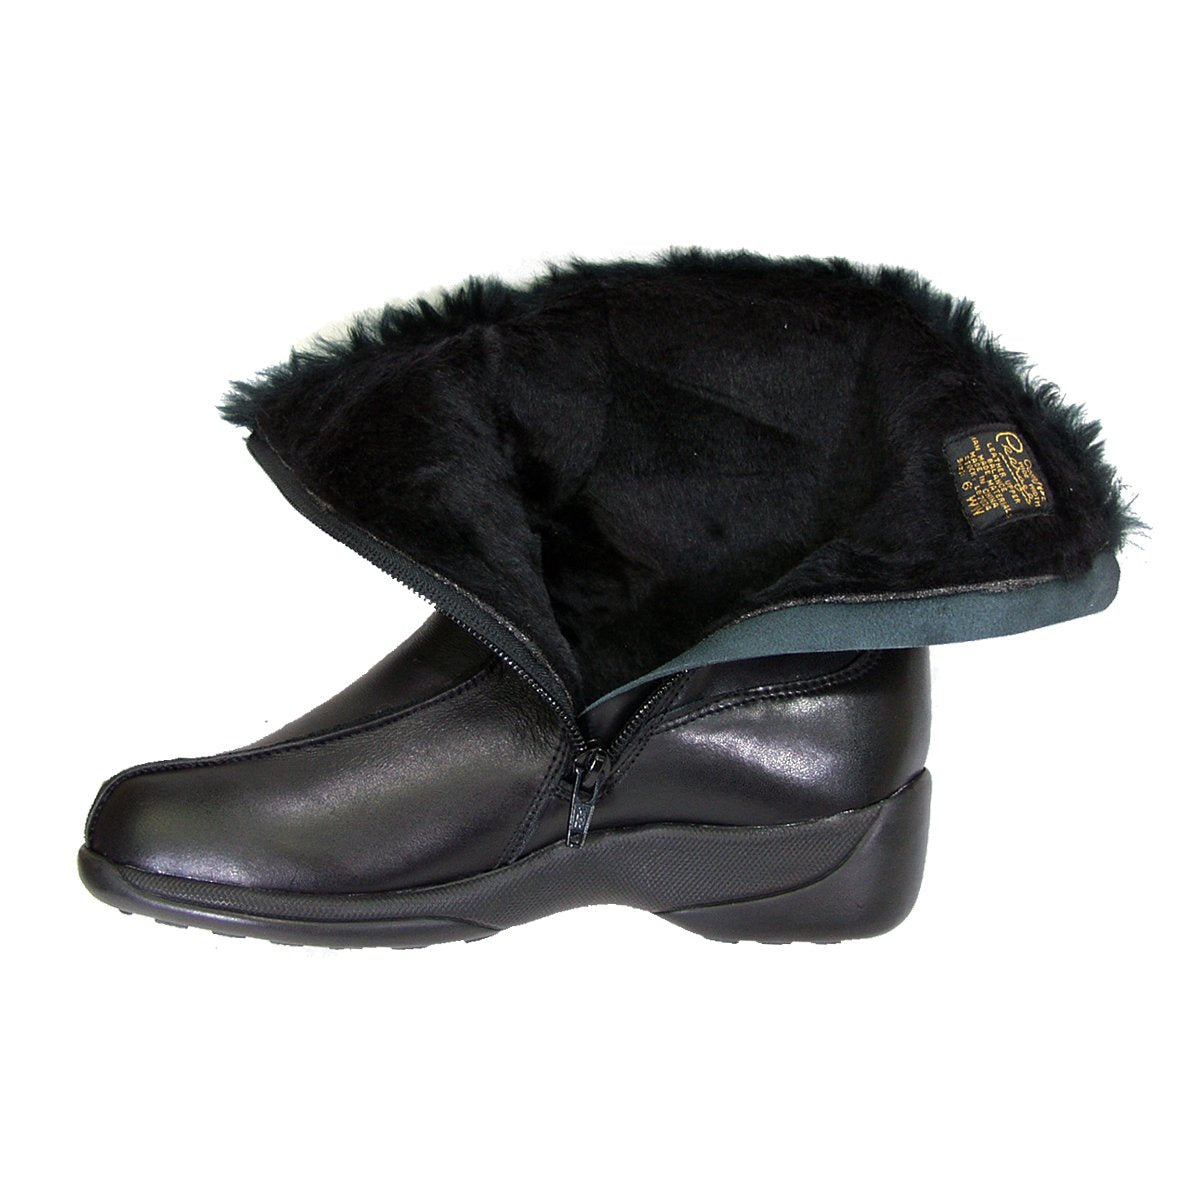 PEERAGE Sharon Women's Wide Width Leather Boots